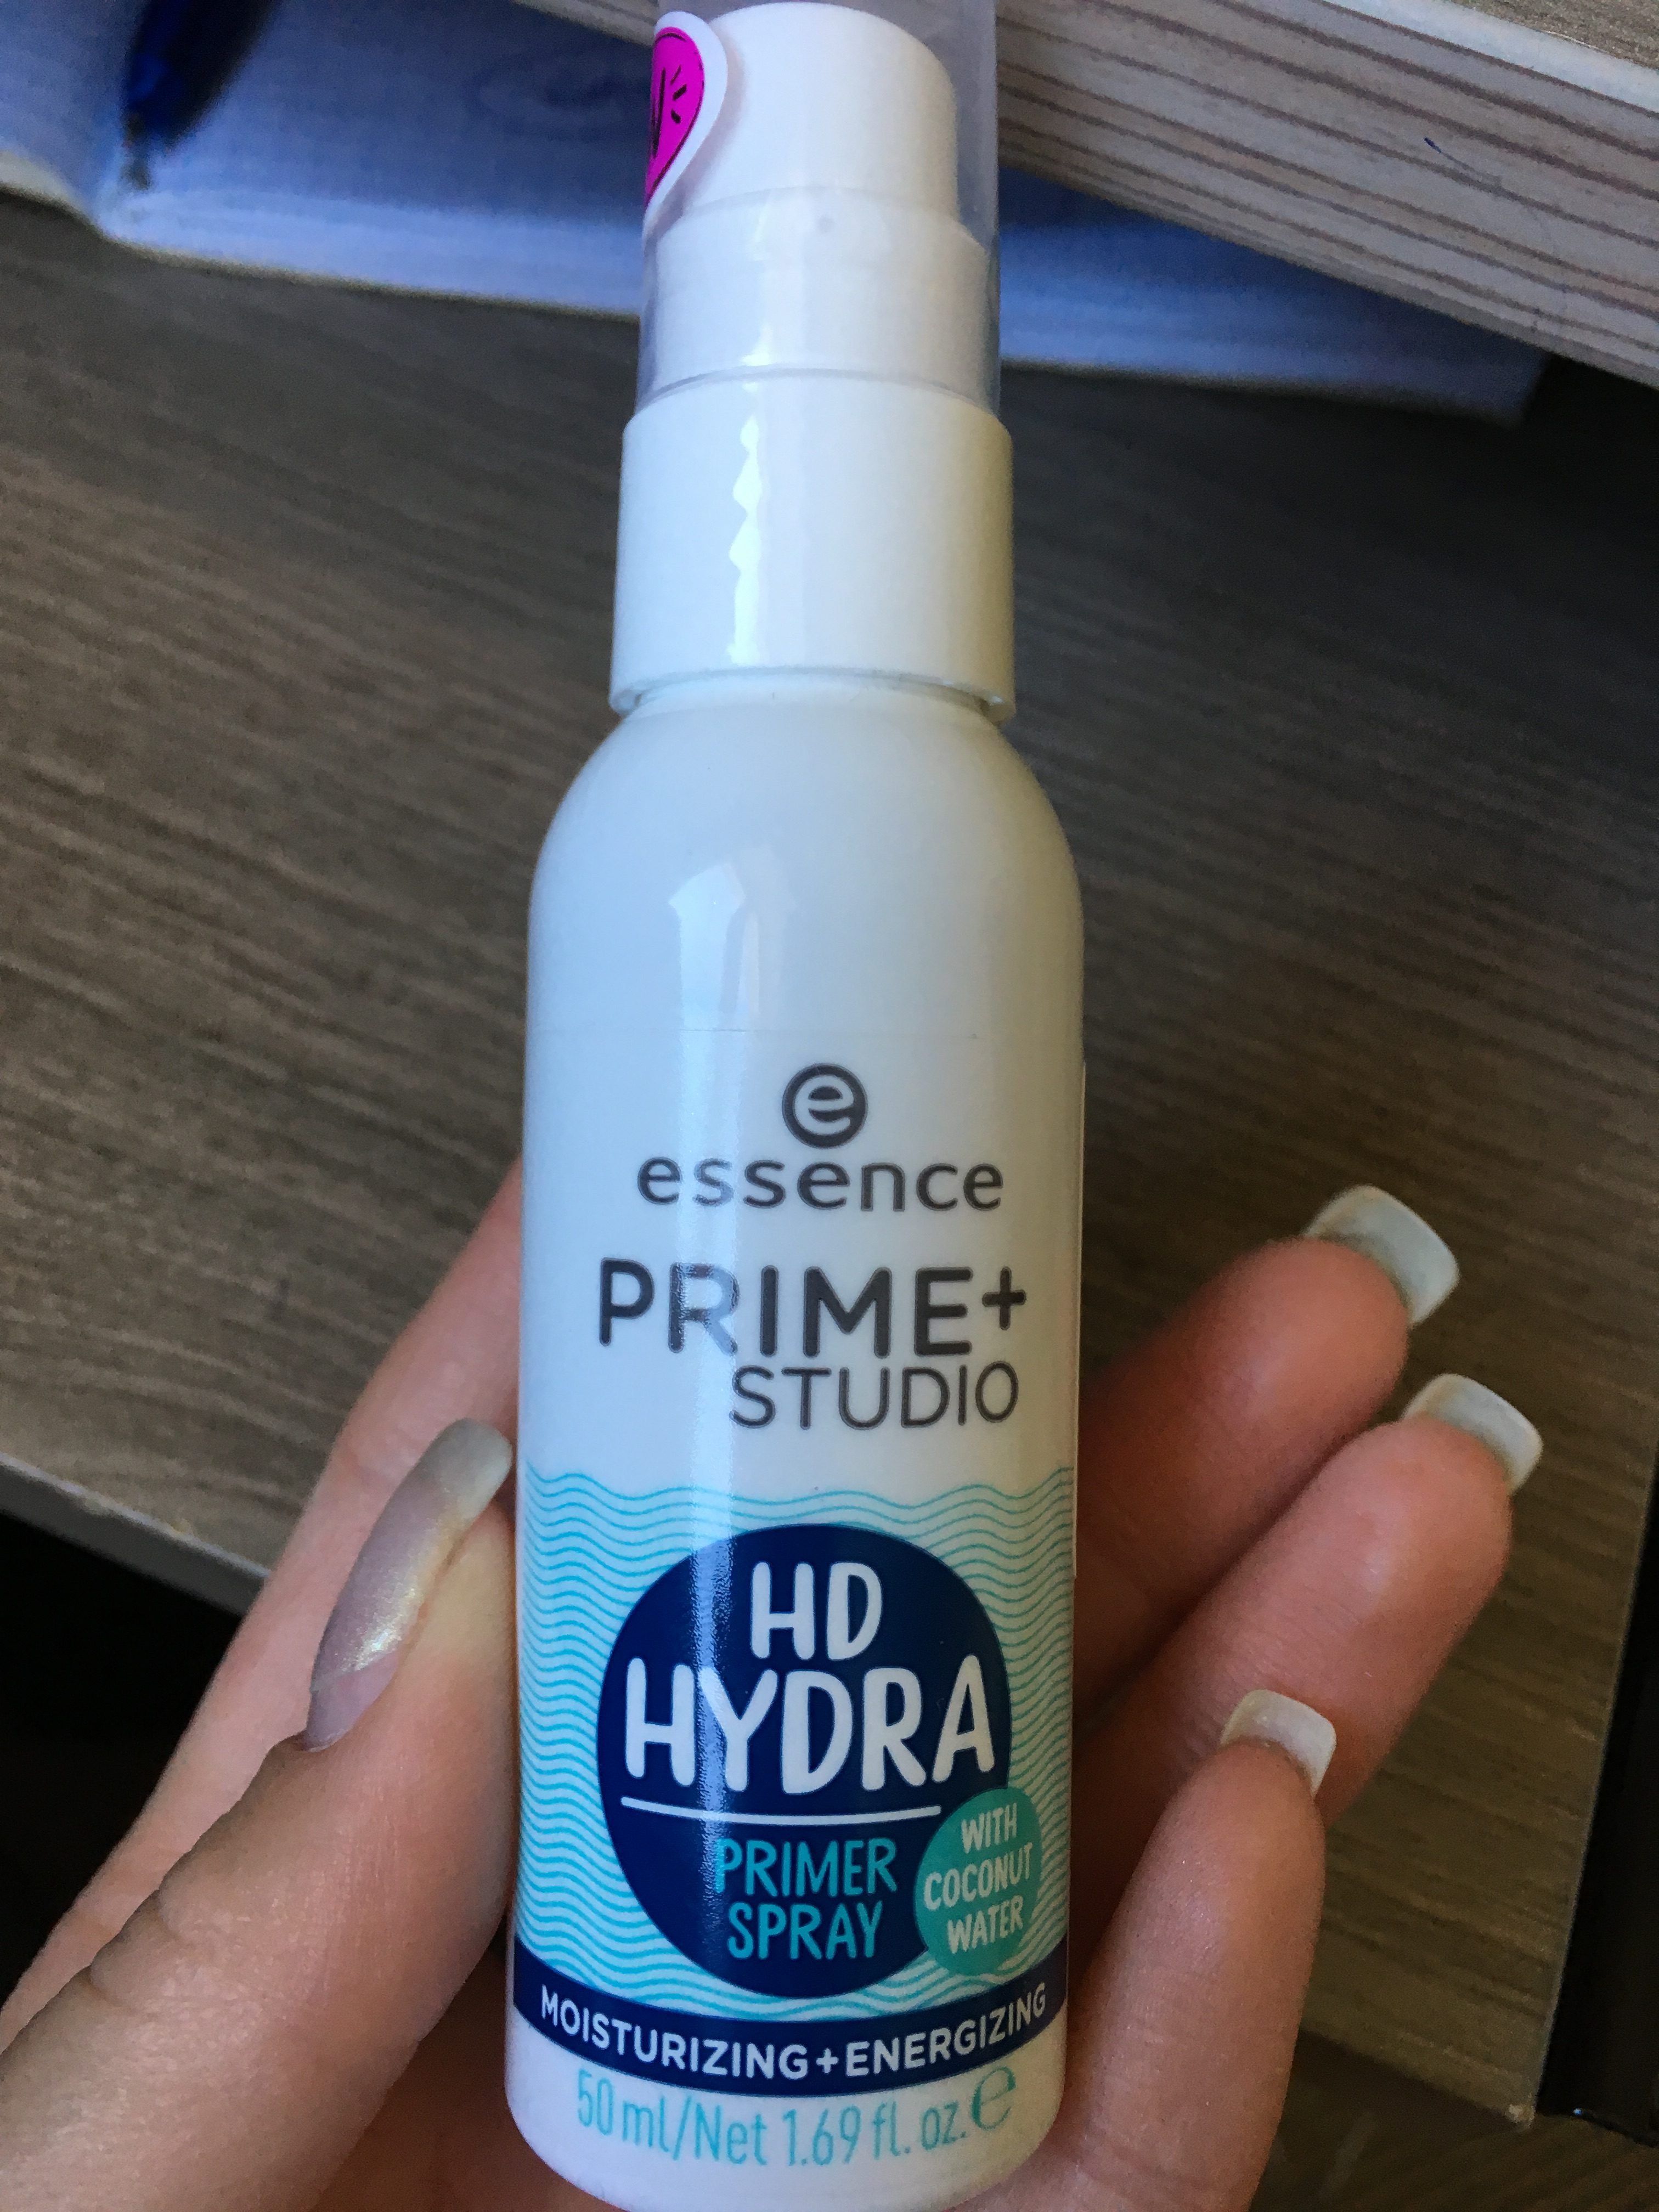 Праймер для лица от Essense prime +studio hd hydra primer spray. Отзыв